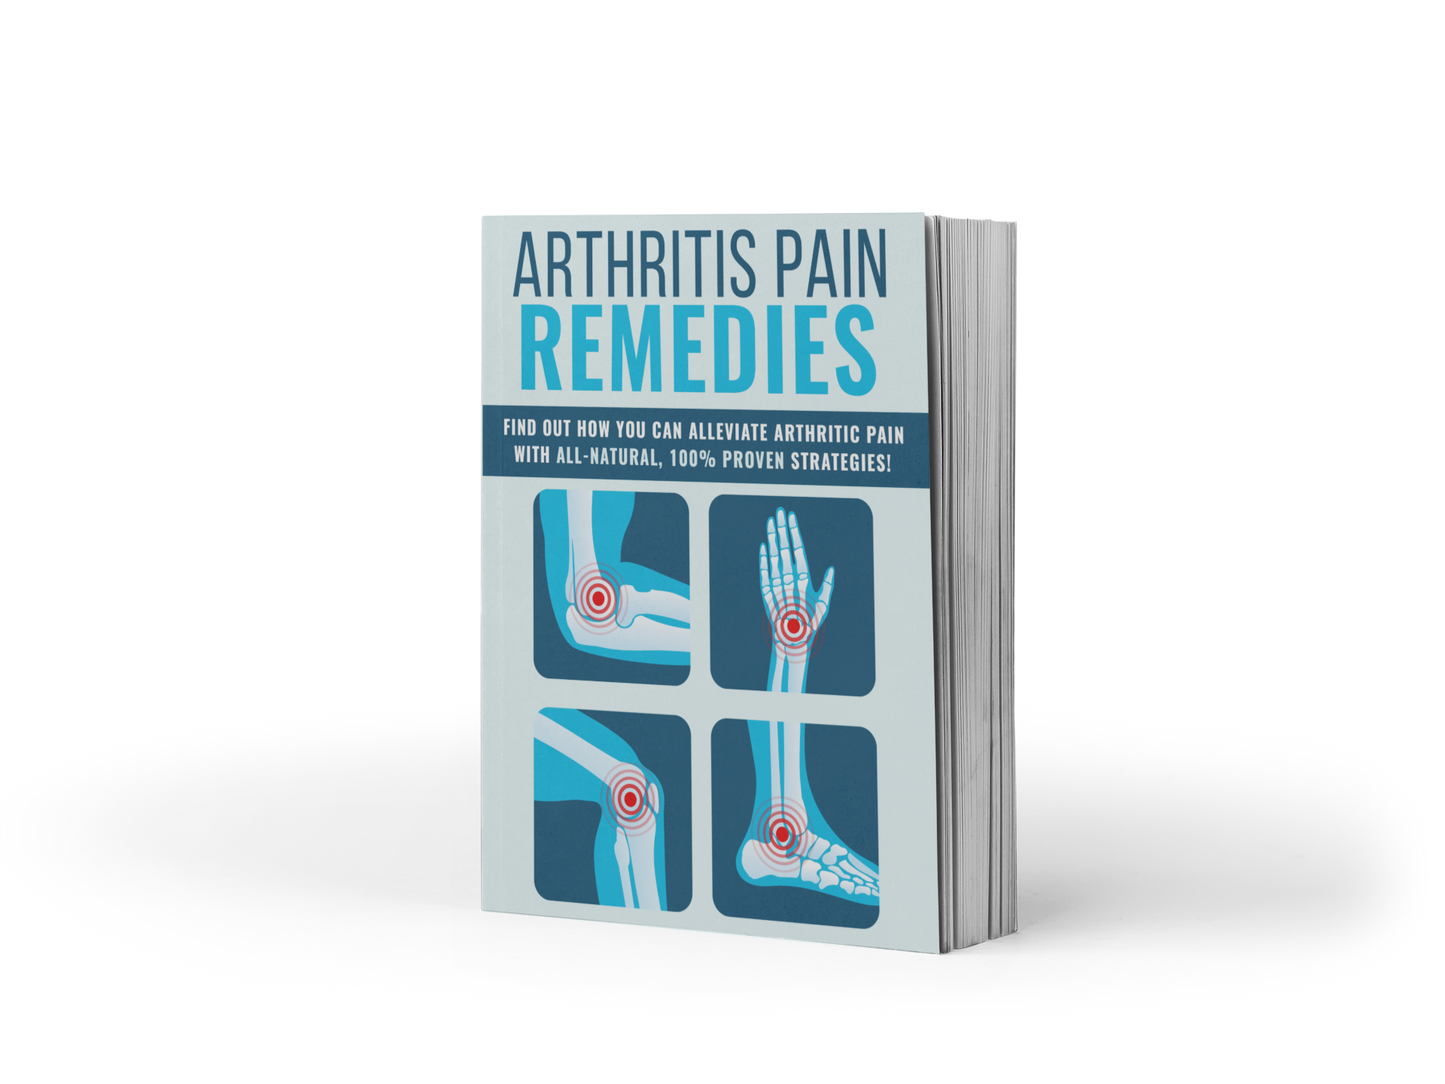 Top Arthritis Pain Remedies [E-Book]